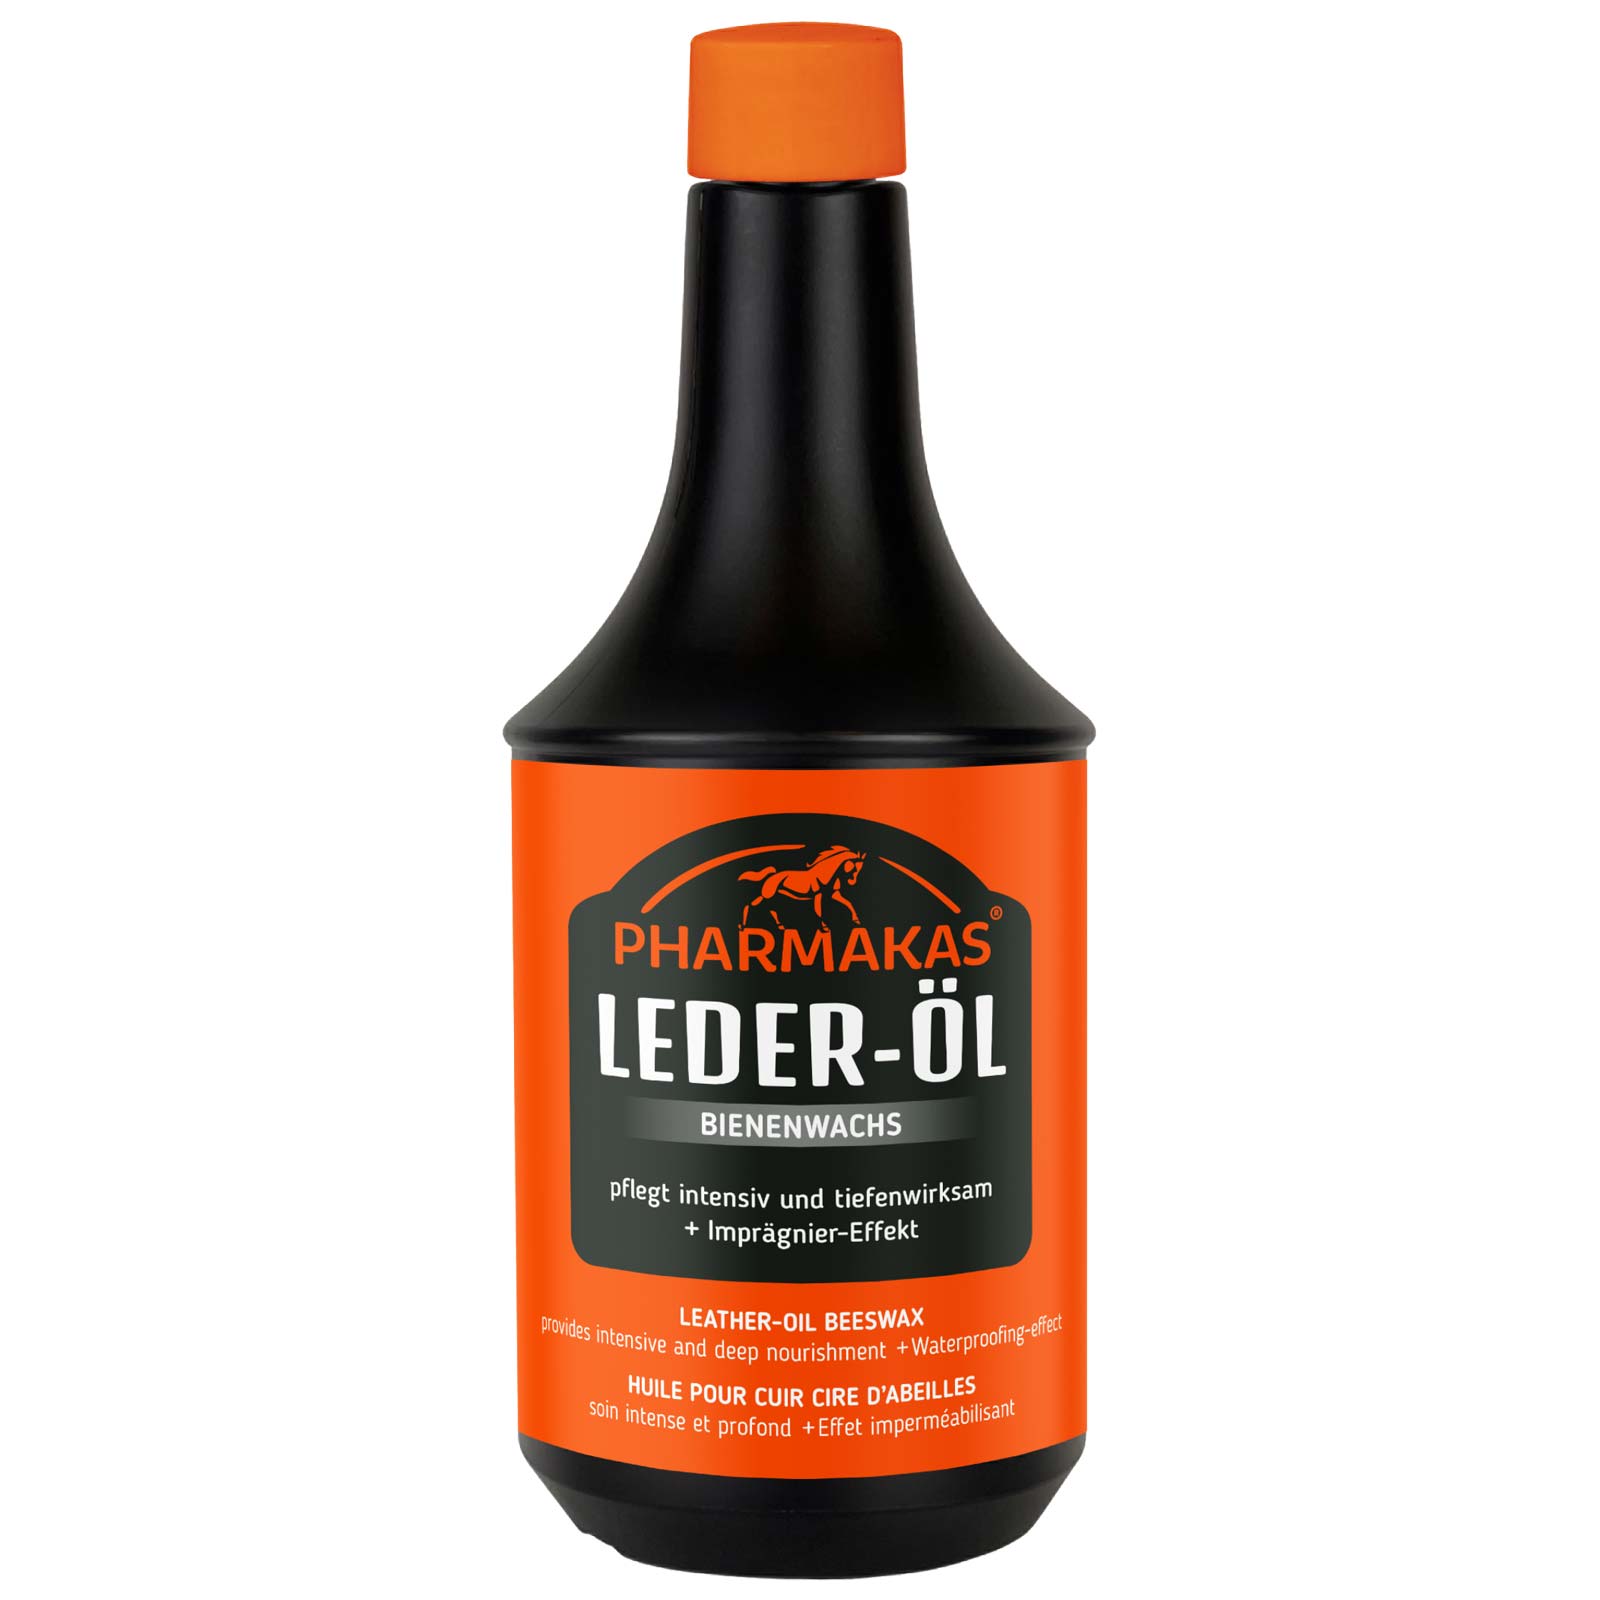 Pharmakas Leather Oil Beeswax